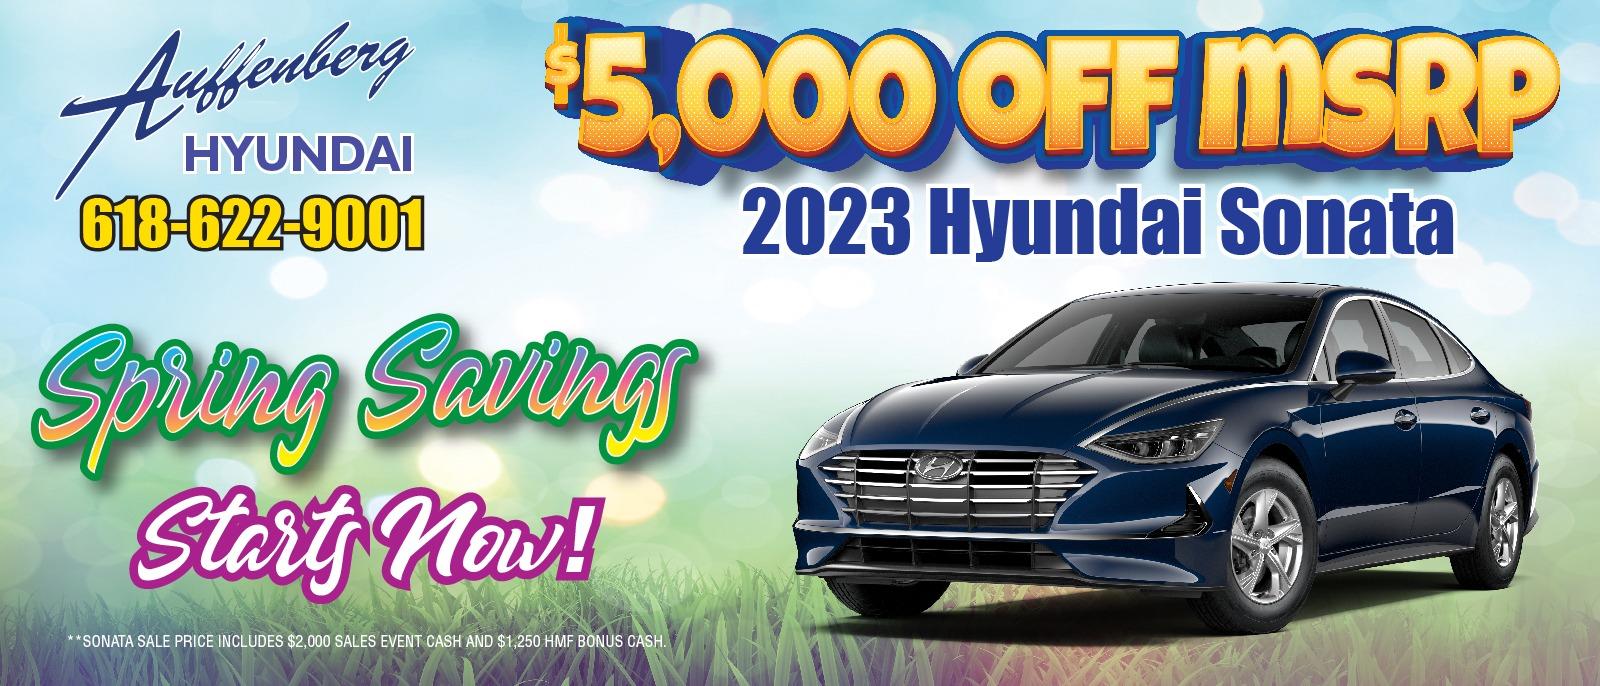 2023 Hyundai Sonata
$5000 off